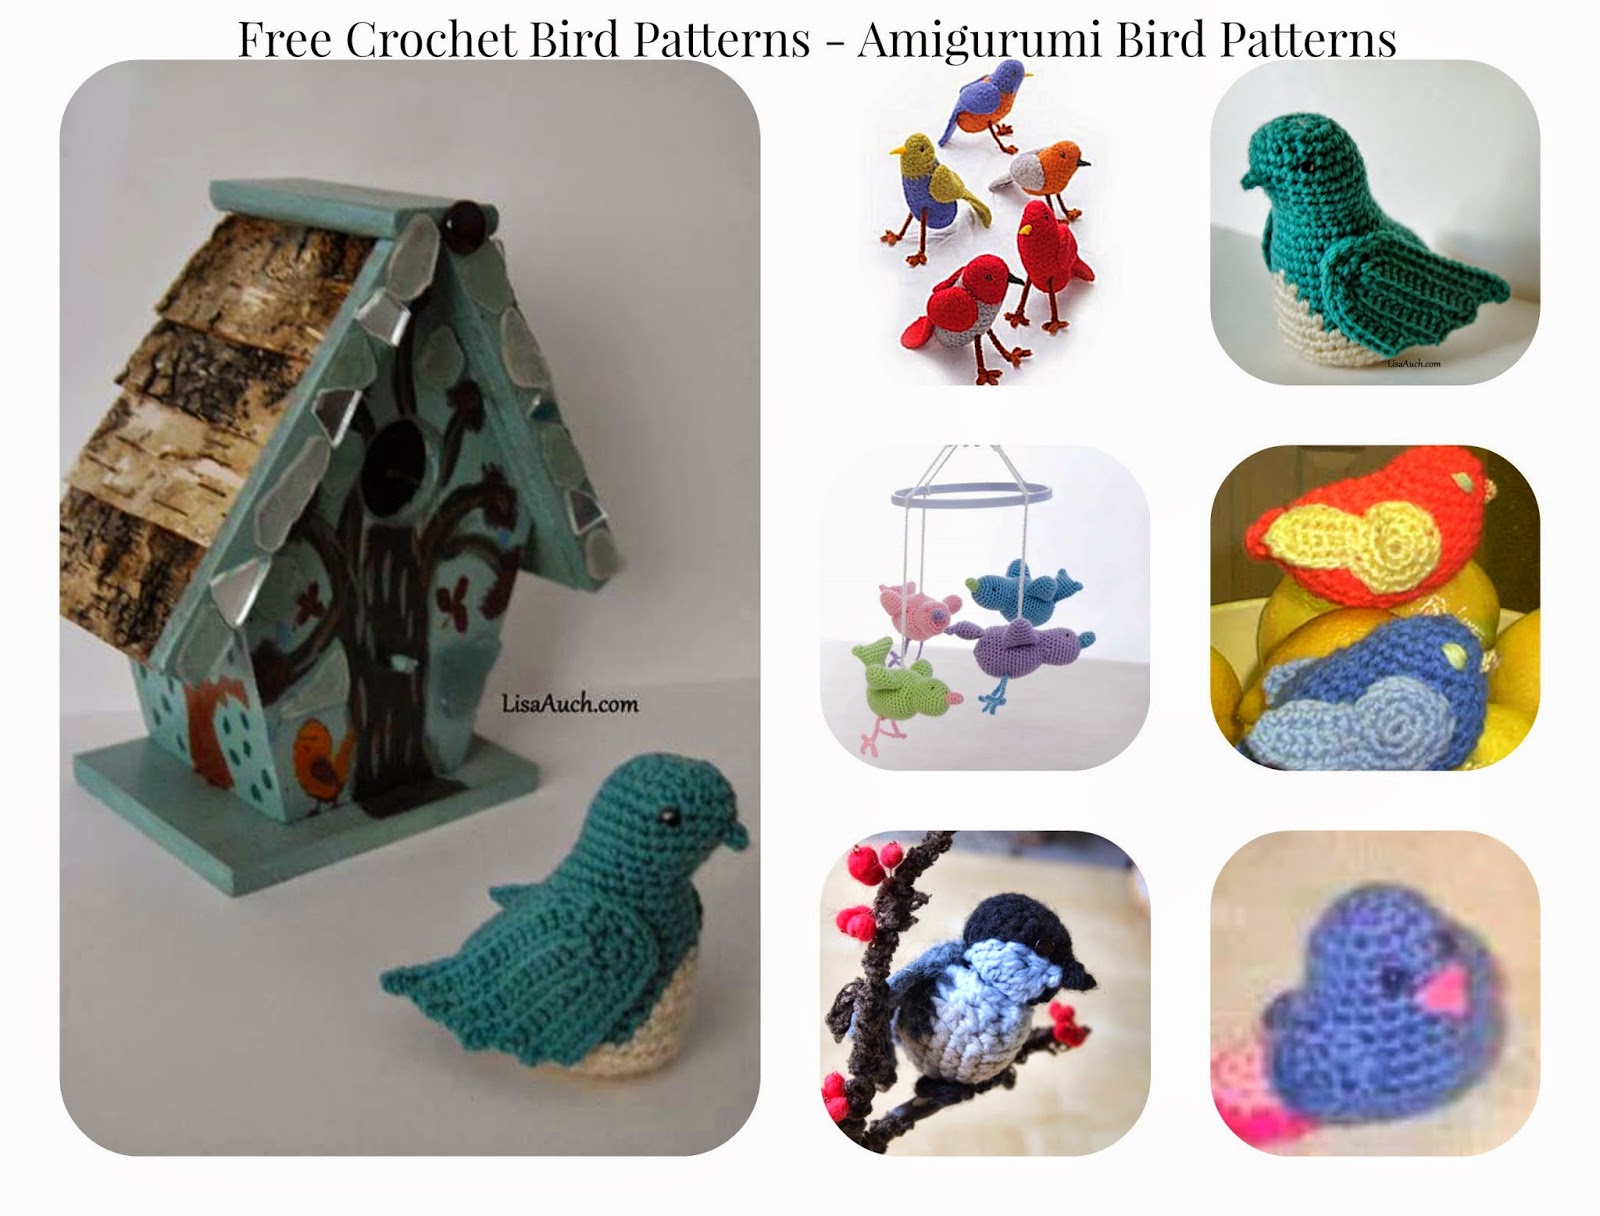 FREE Crochet Bird Patterns